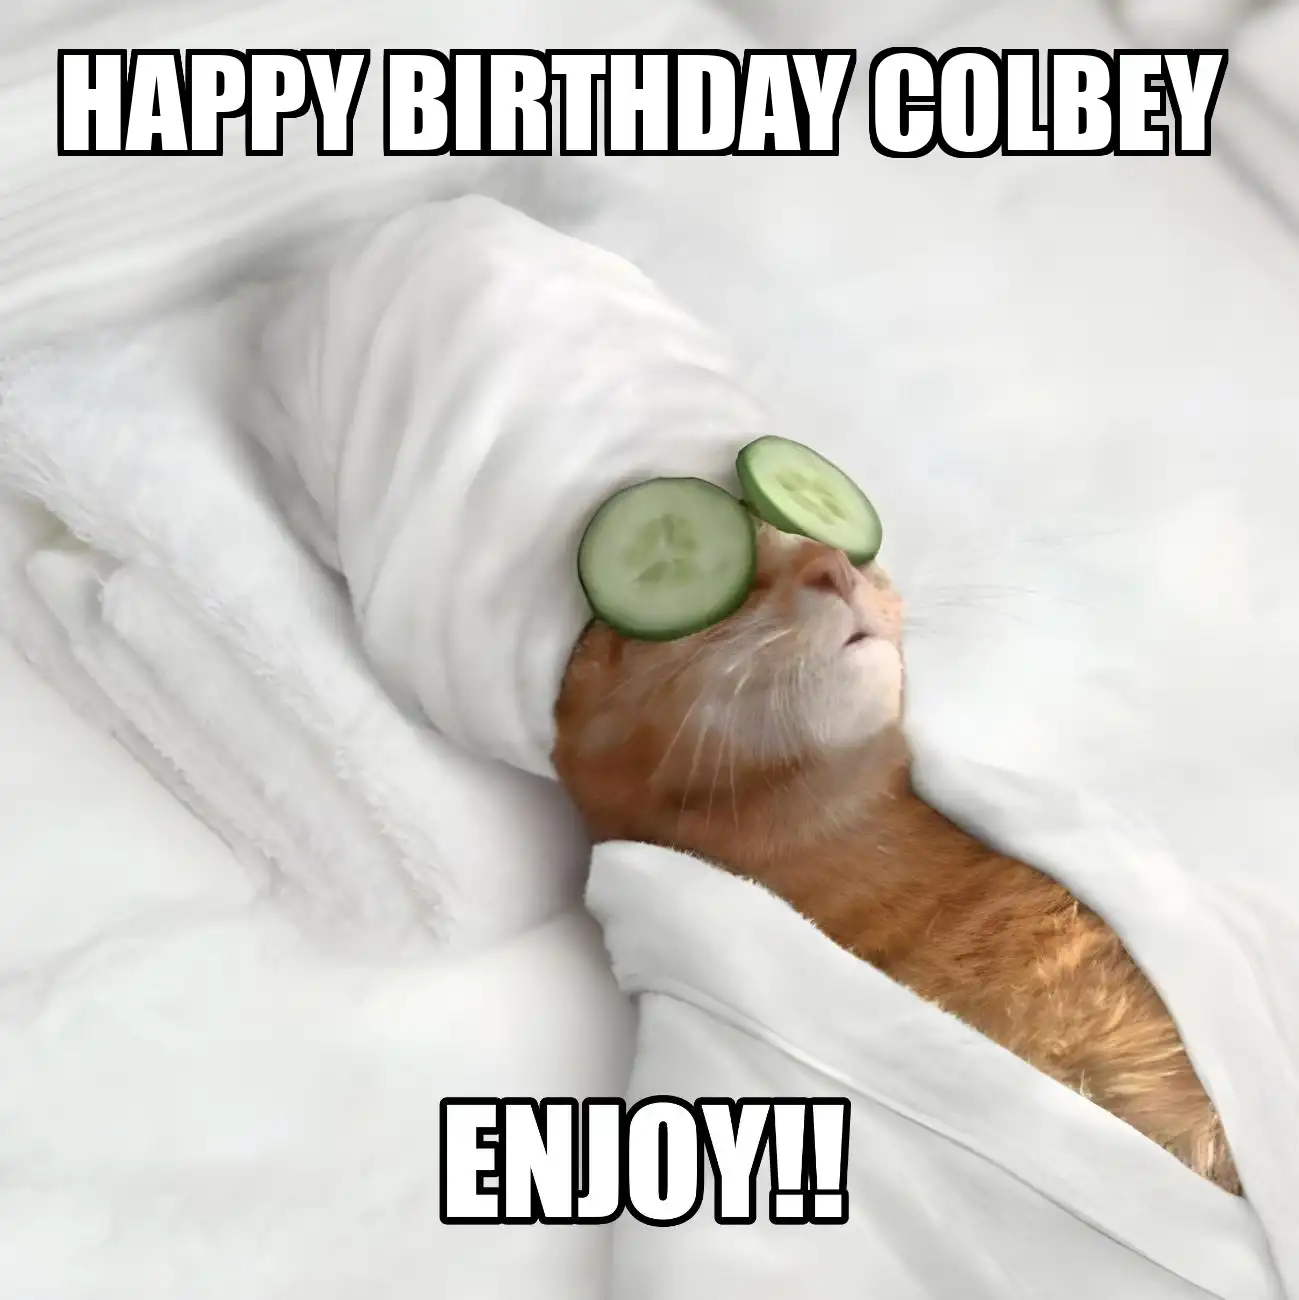 Happy Birthday Colbey Enjoy Cat Meme